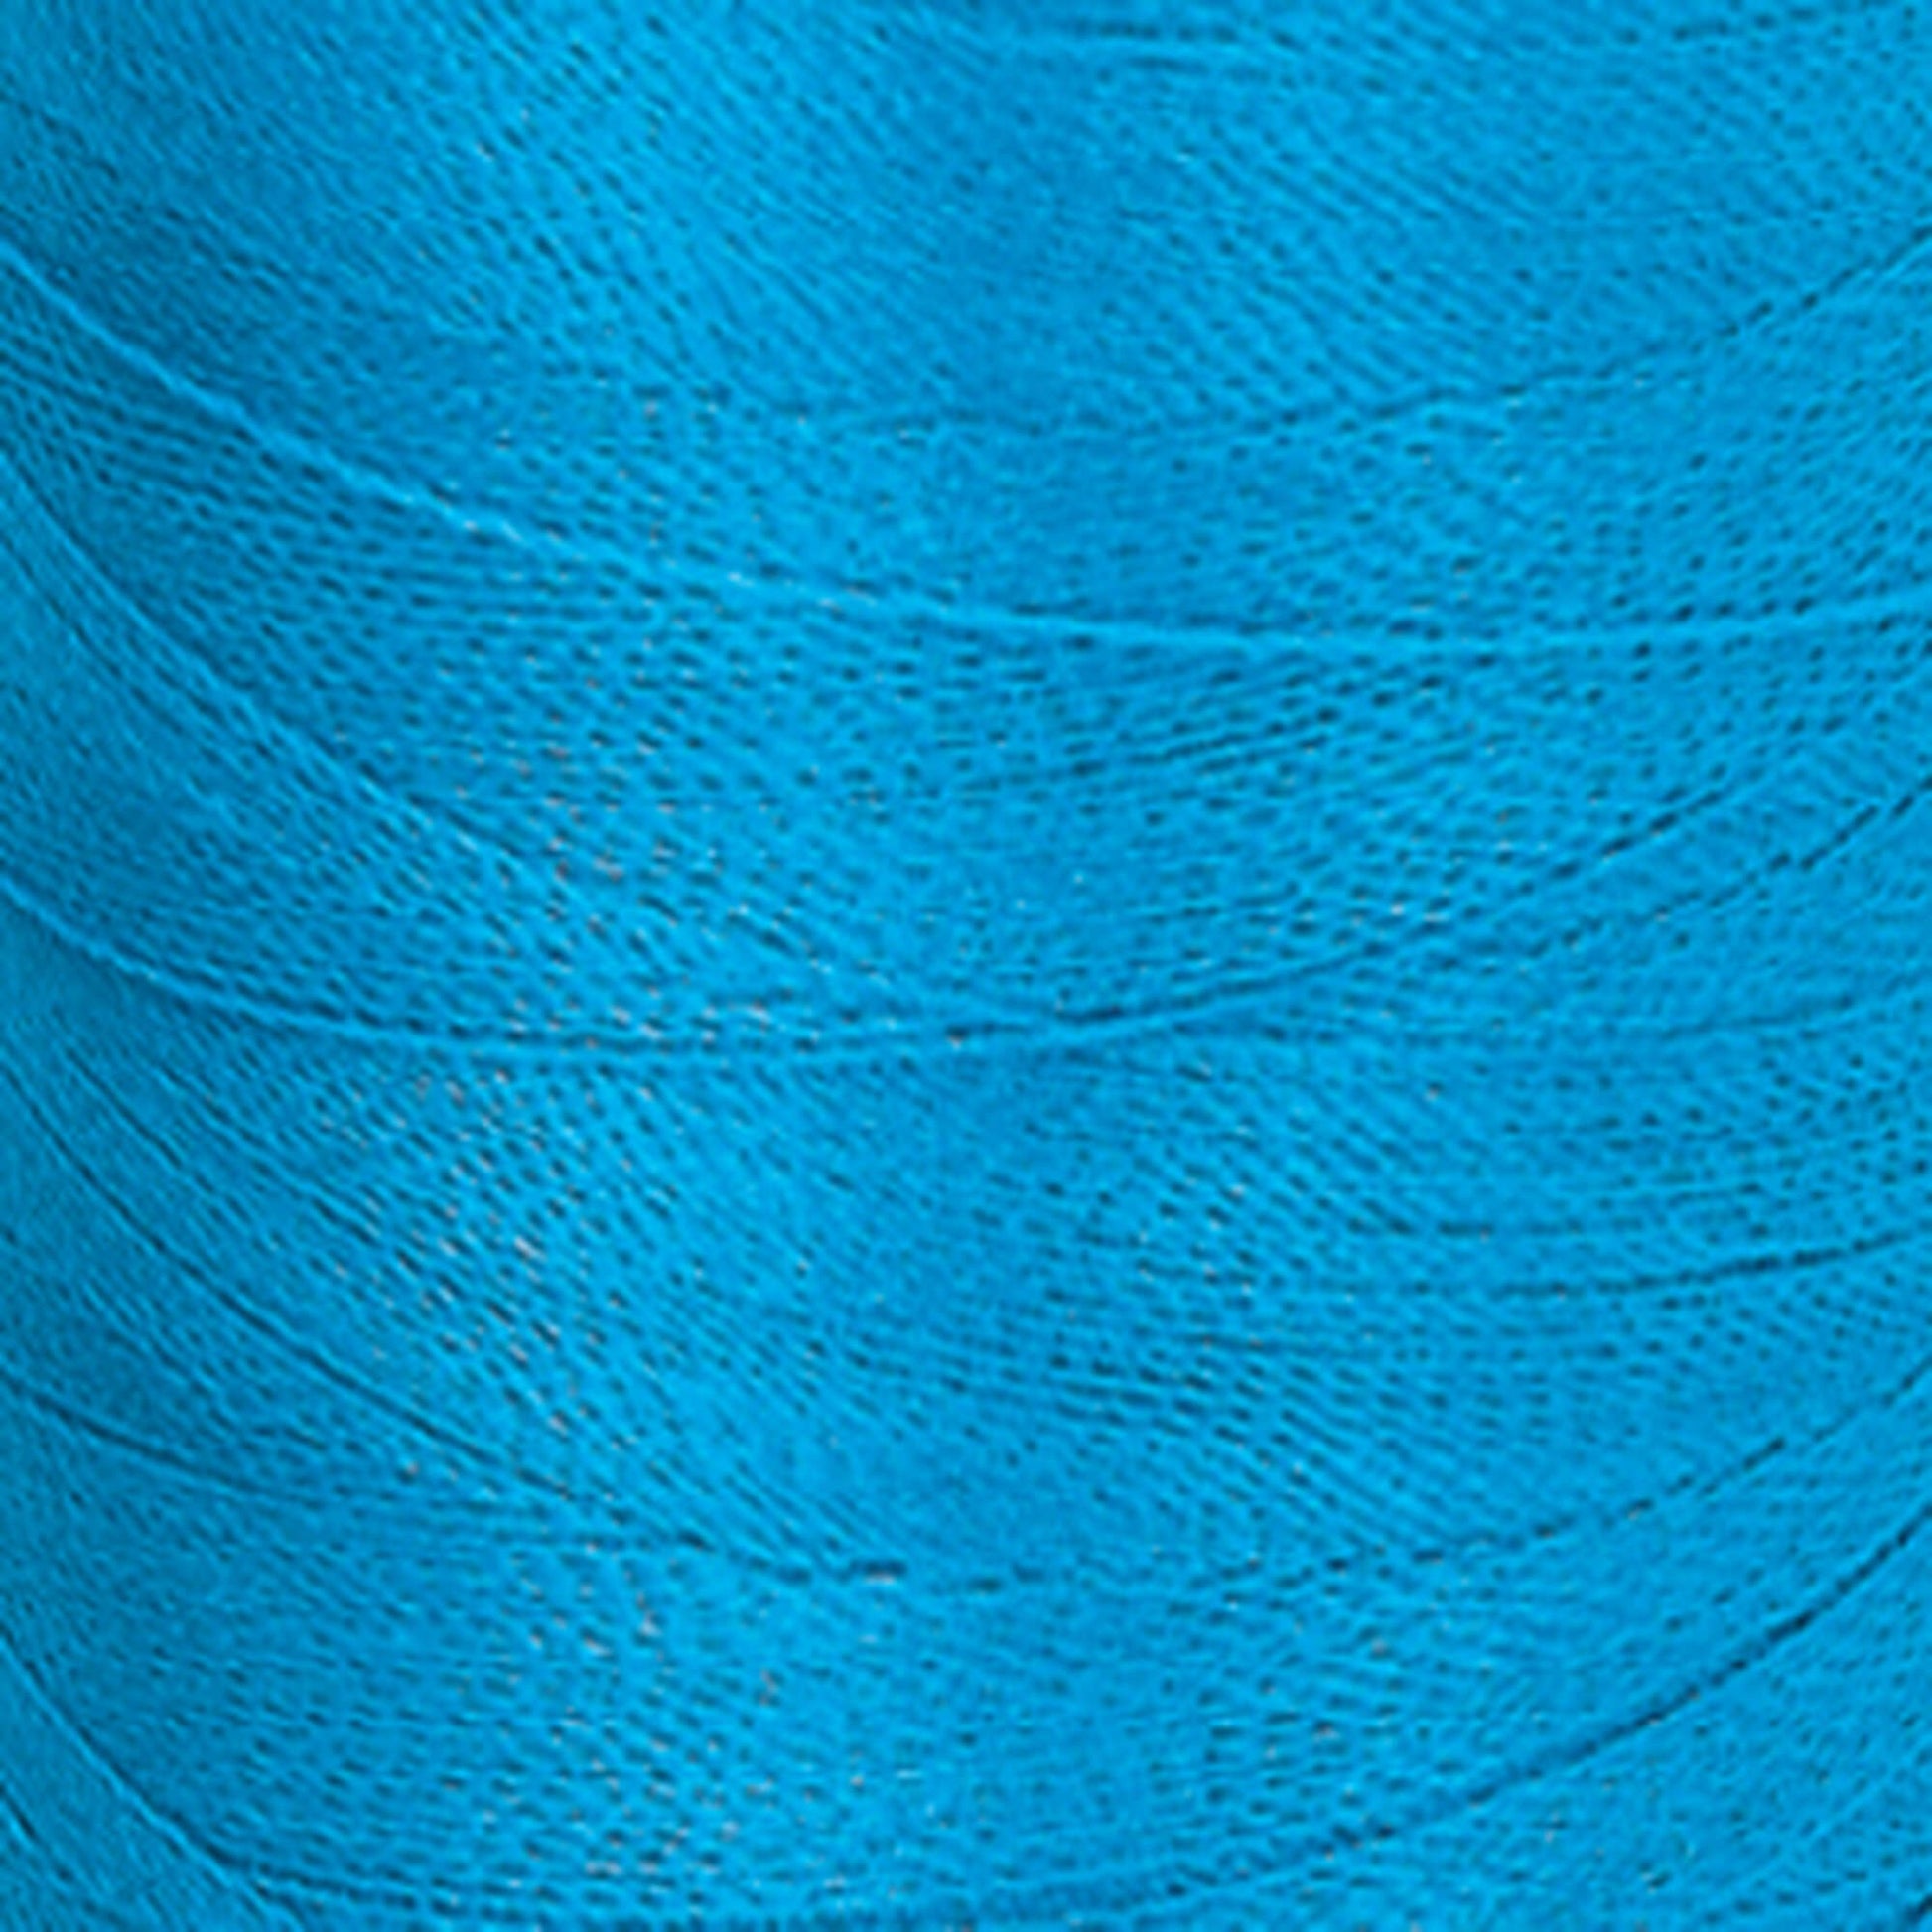 Coats & Clark Machine Embroidery Thread (1100 Yards) Parakeet